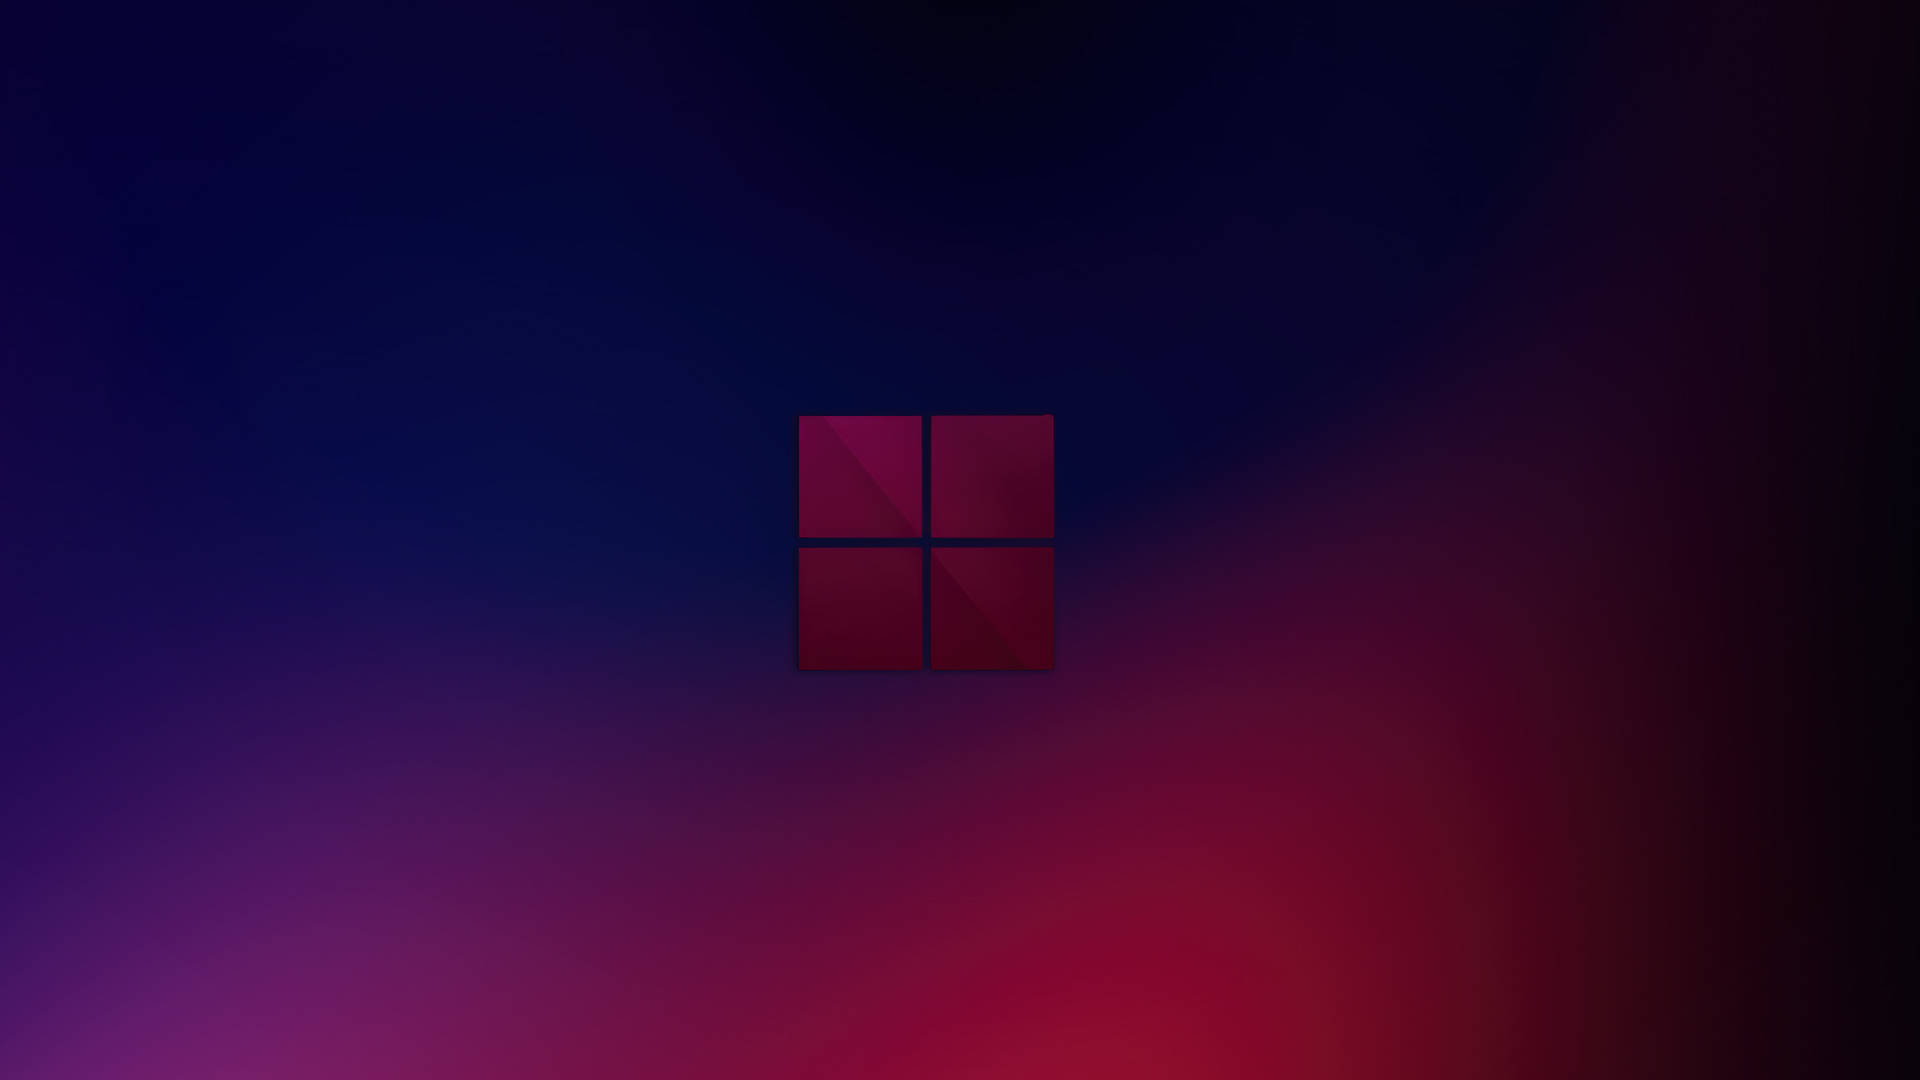 Windows 11 3840X2160 wallpaper